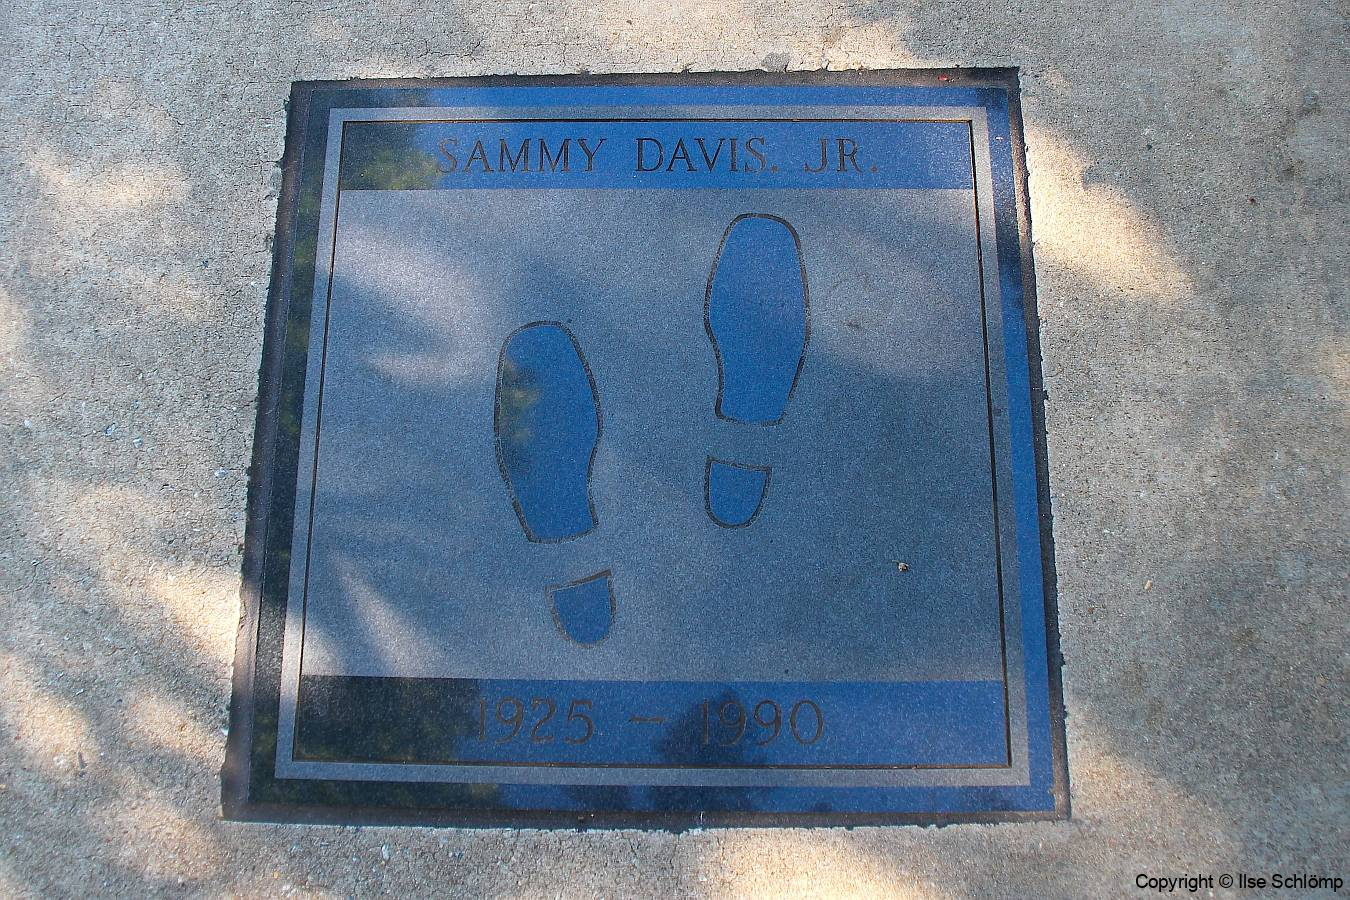 USA, Georgia, Atlanta, International Civil Rights Walk of Fame